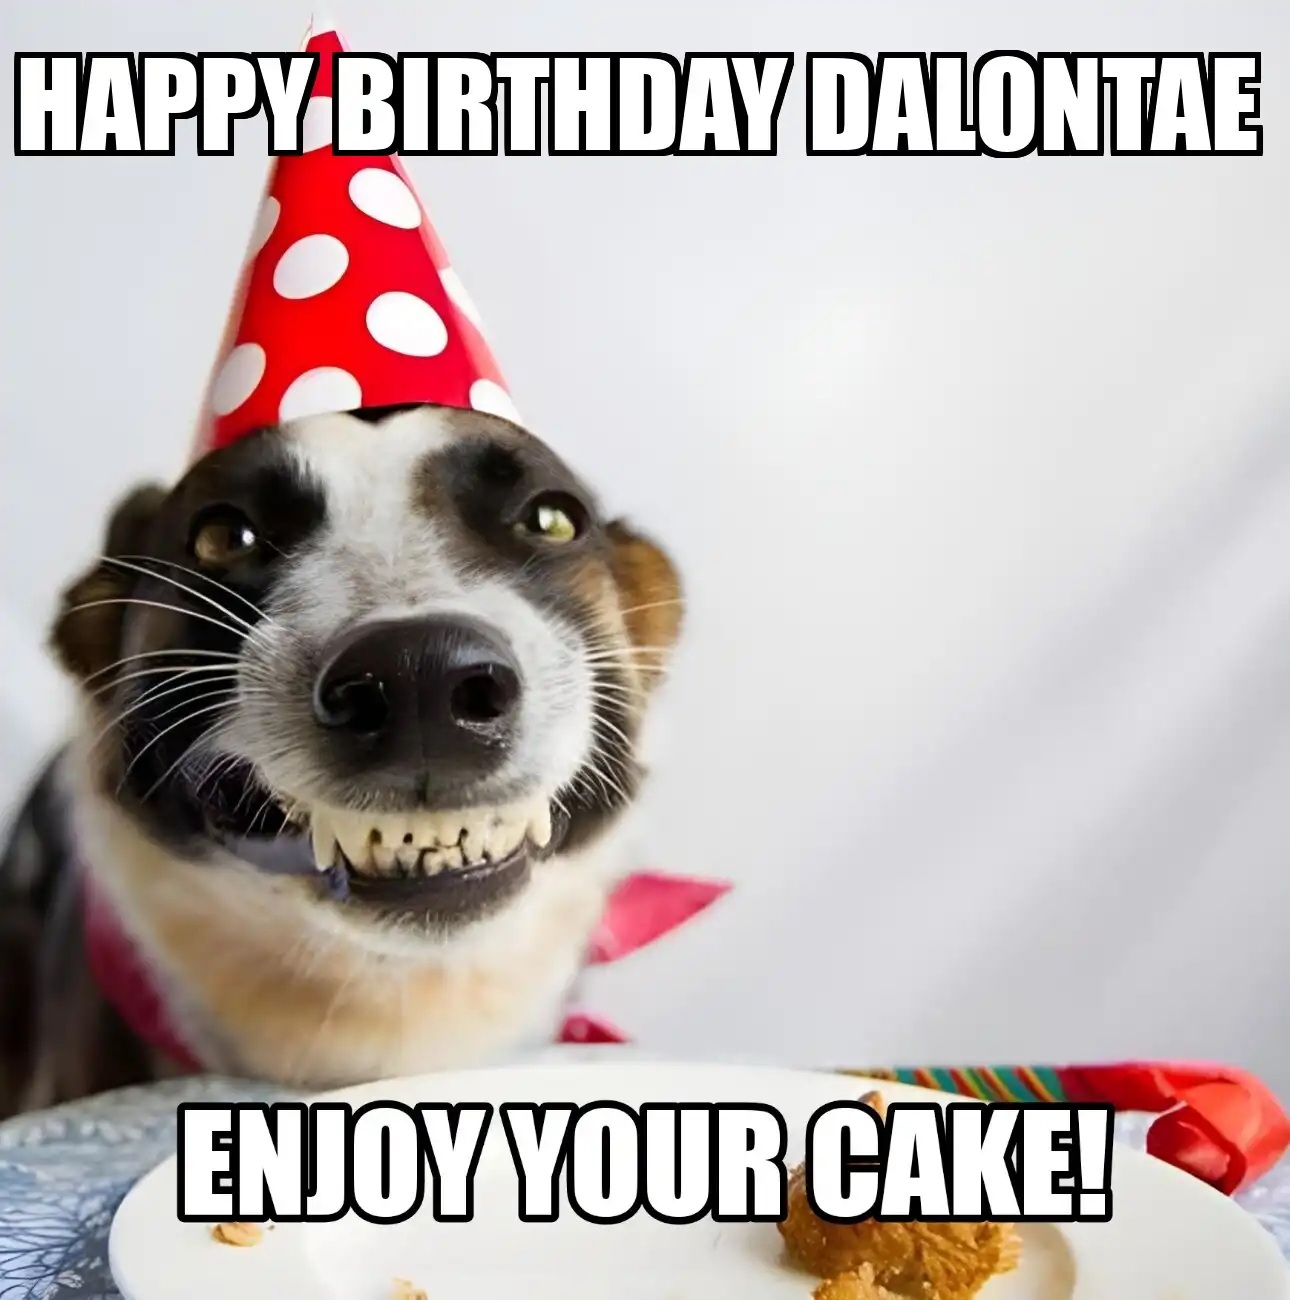 Happy Birthday Dalontae Enjoy Your Cake Dog Meme